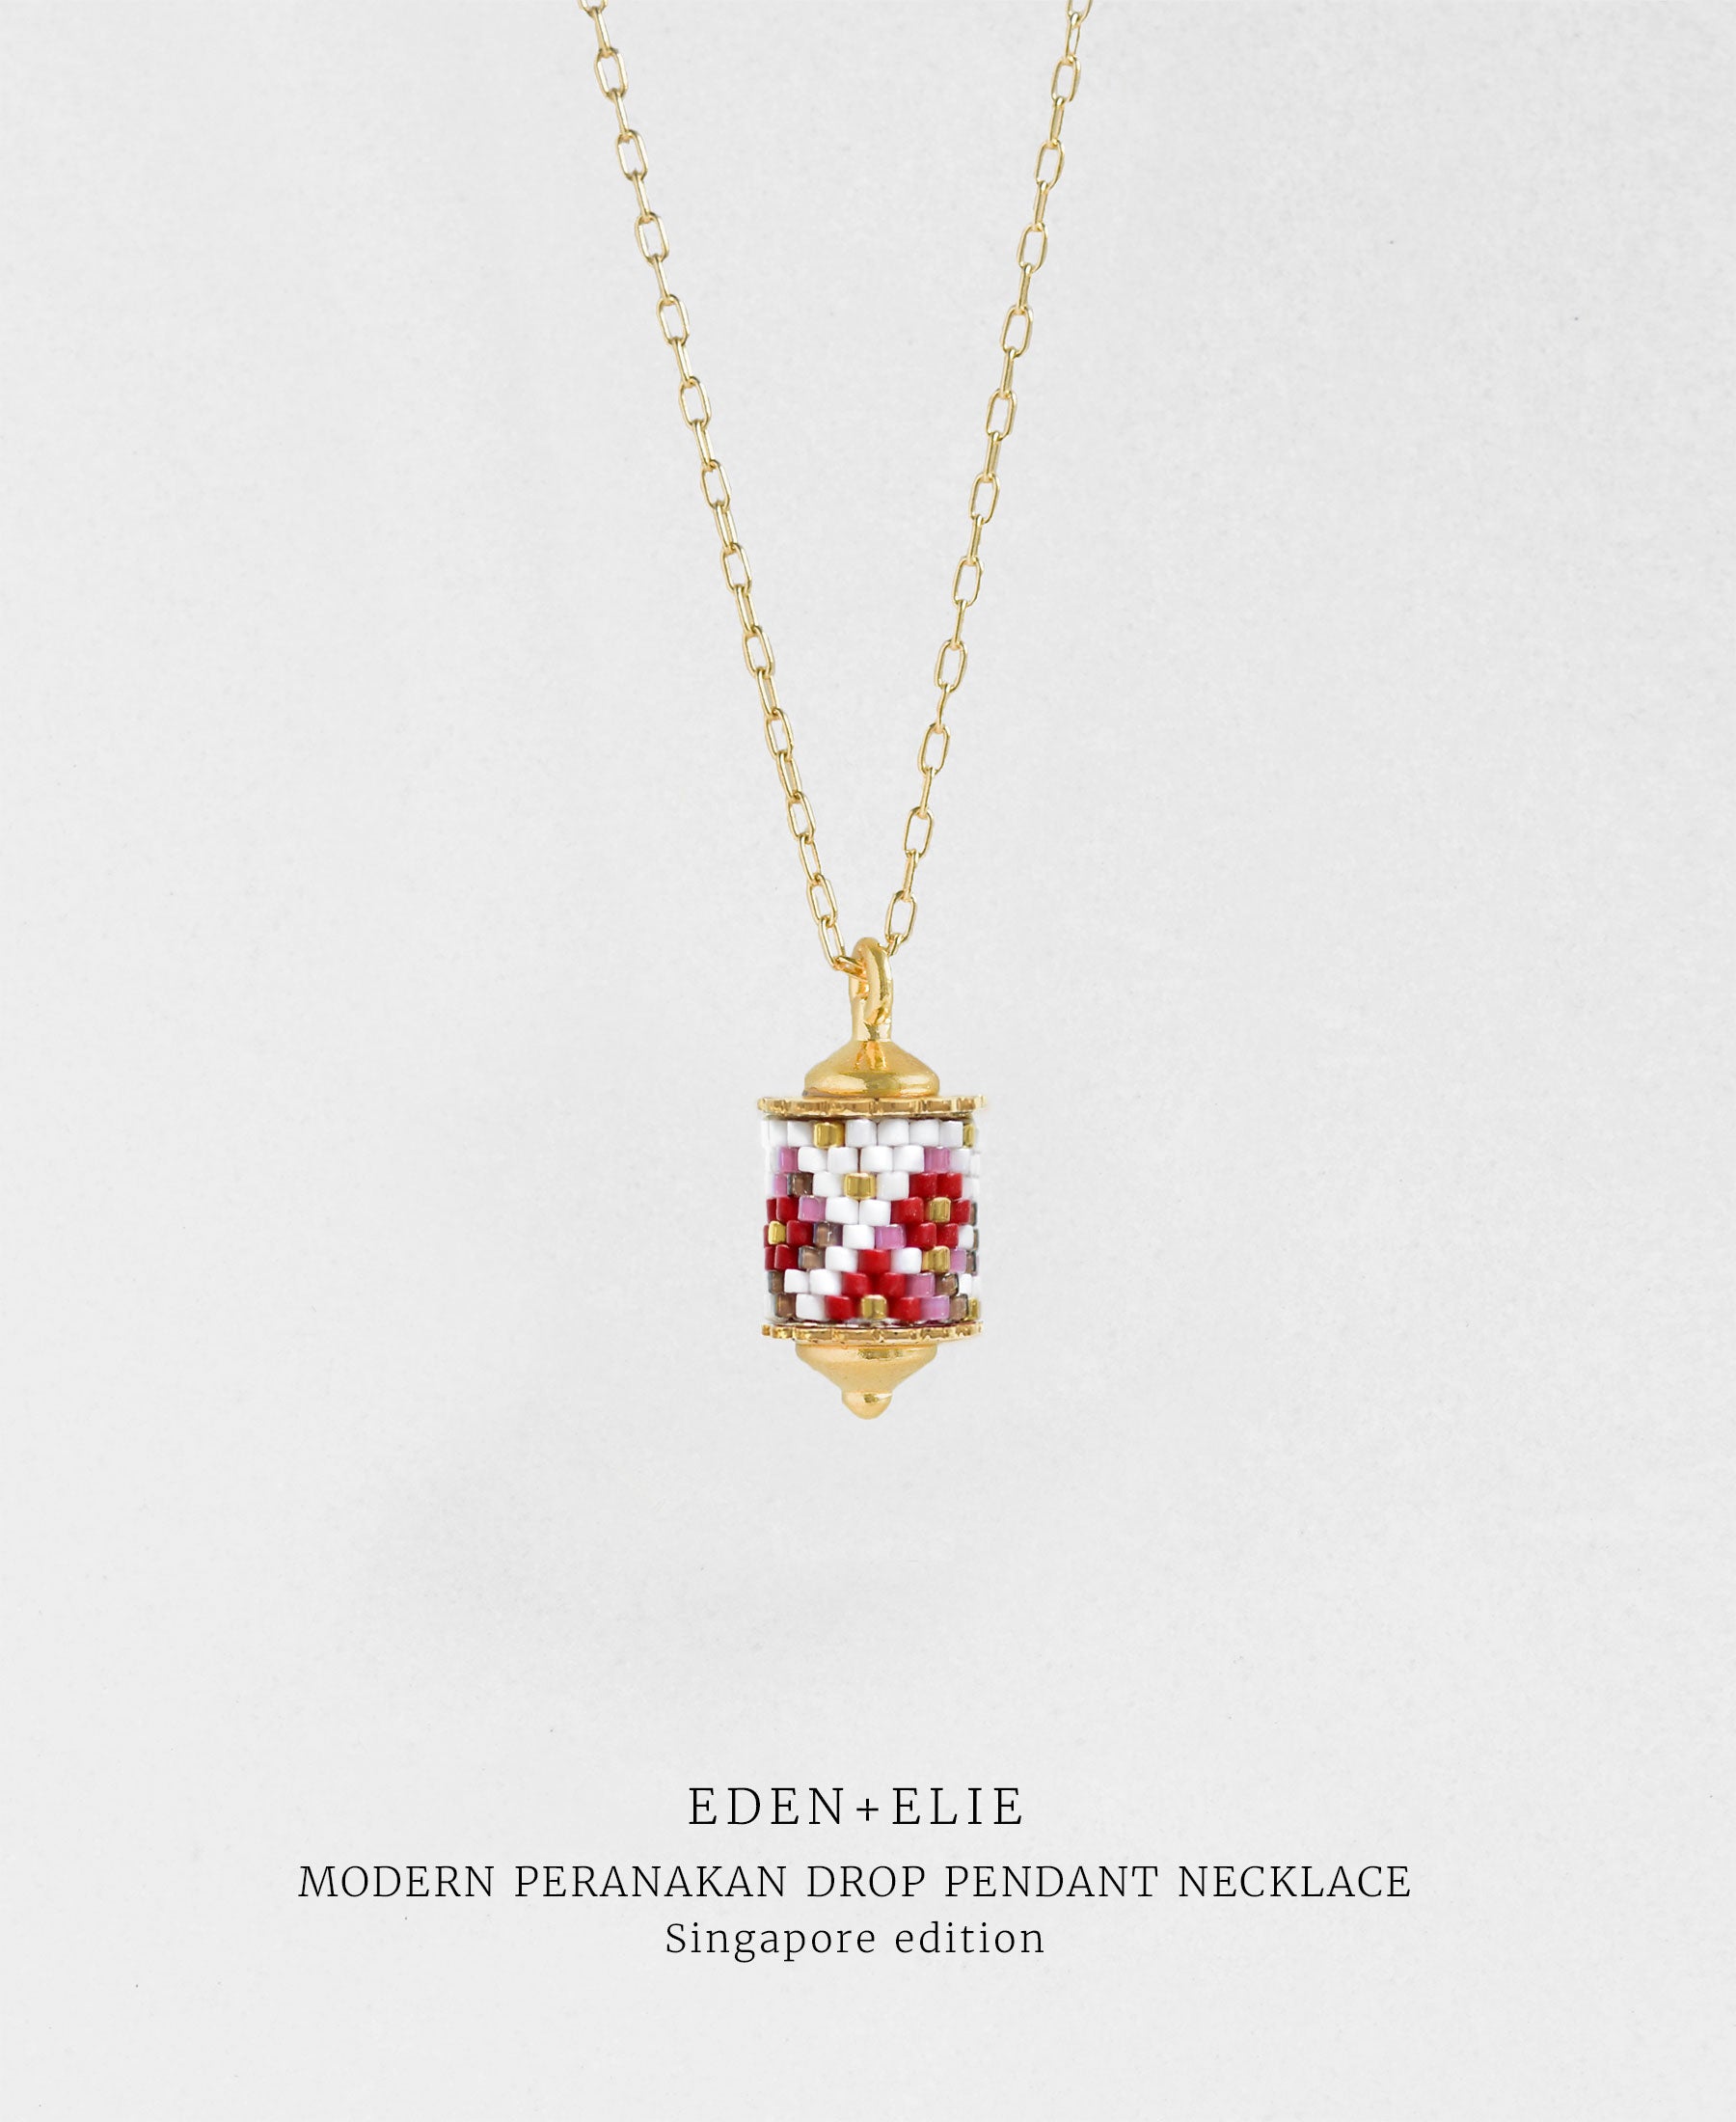 EDEN + ELIE Modern Peranakan drop pendant necklace - Singapore edition